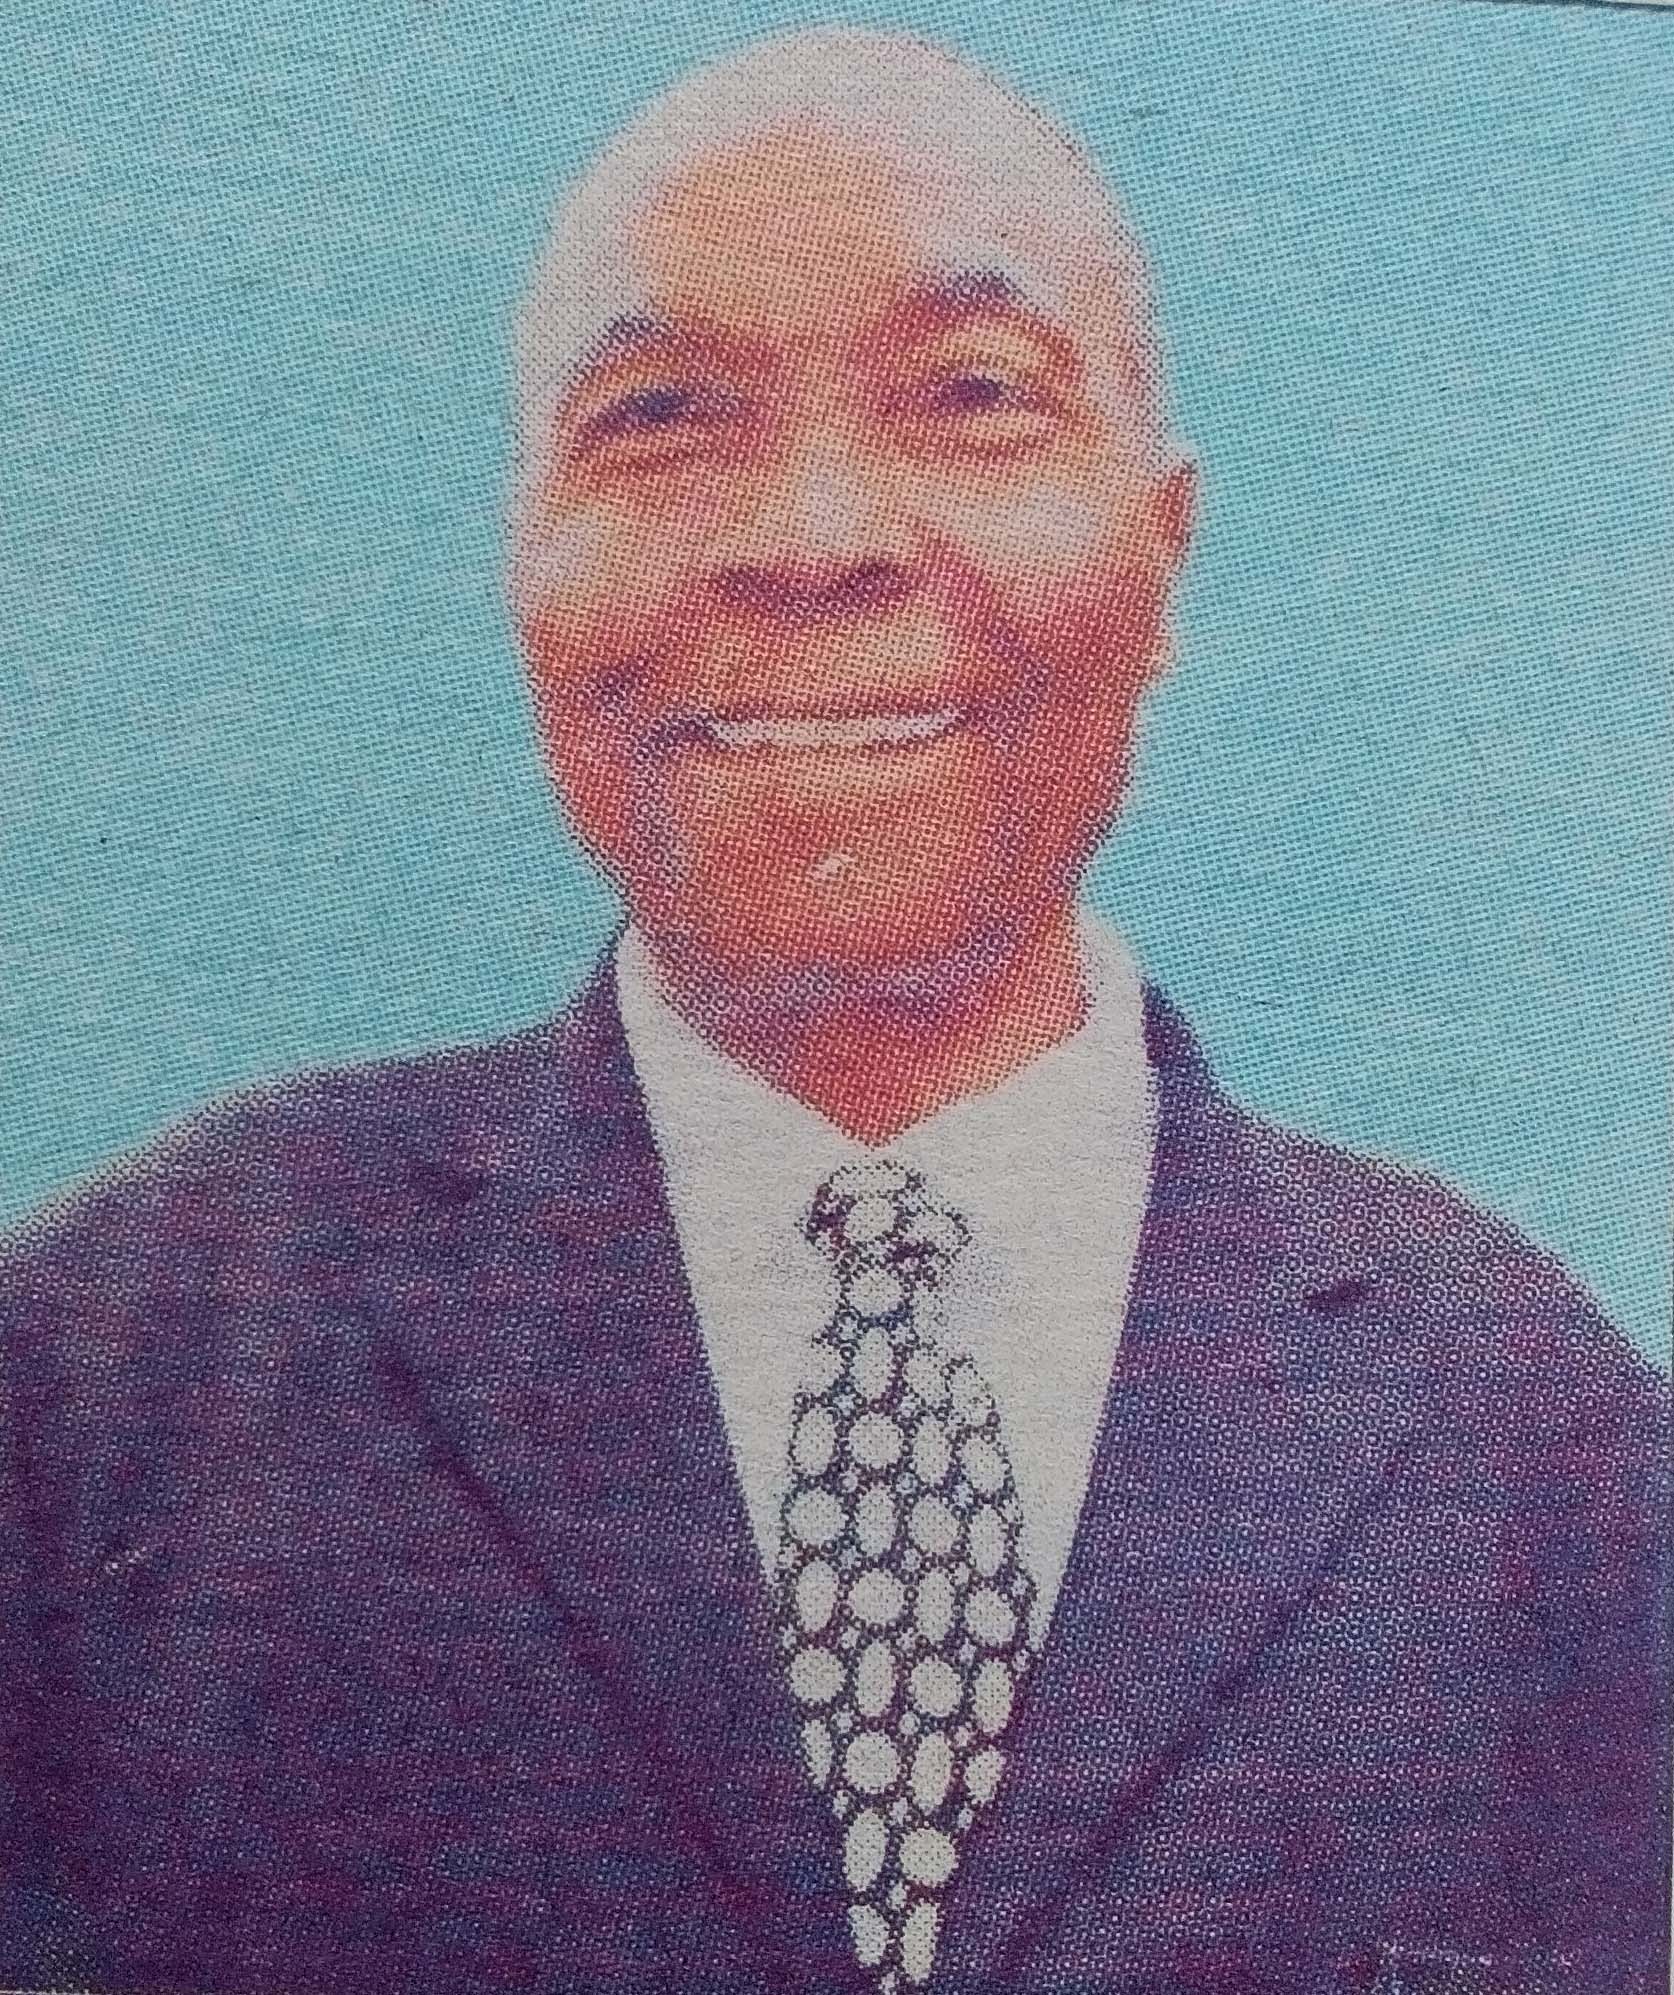 Obituary Image of Joshua Mutua Imenyi